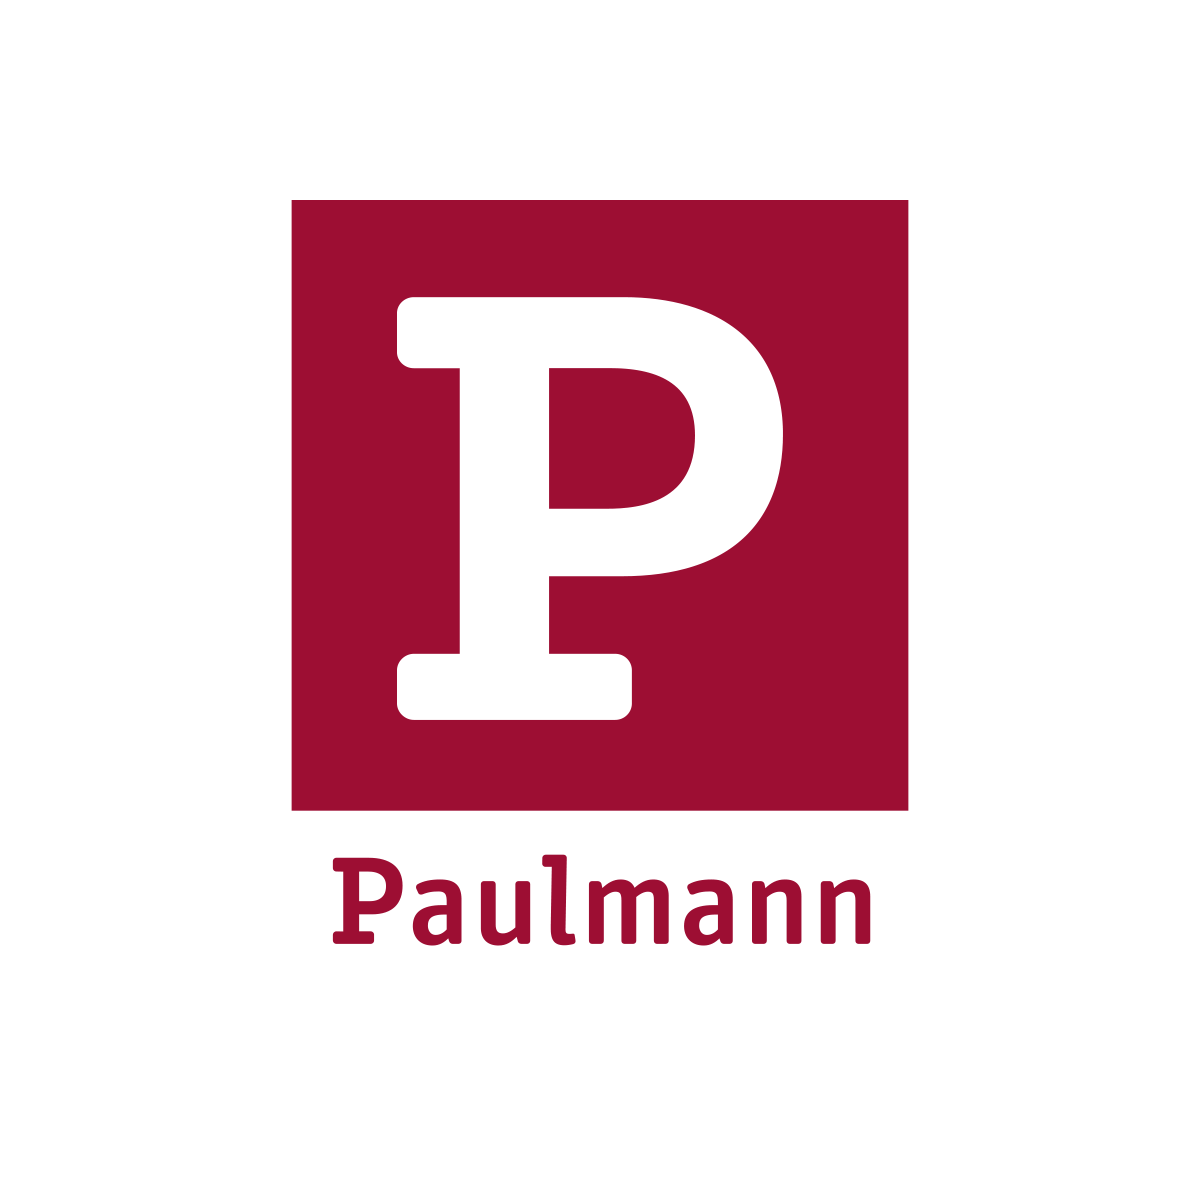 Paulmann